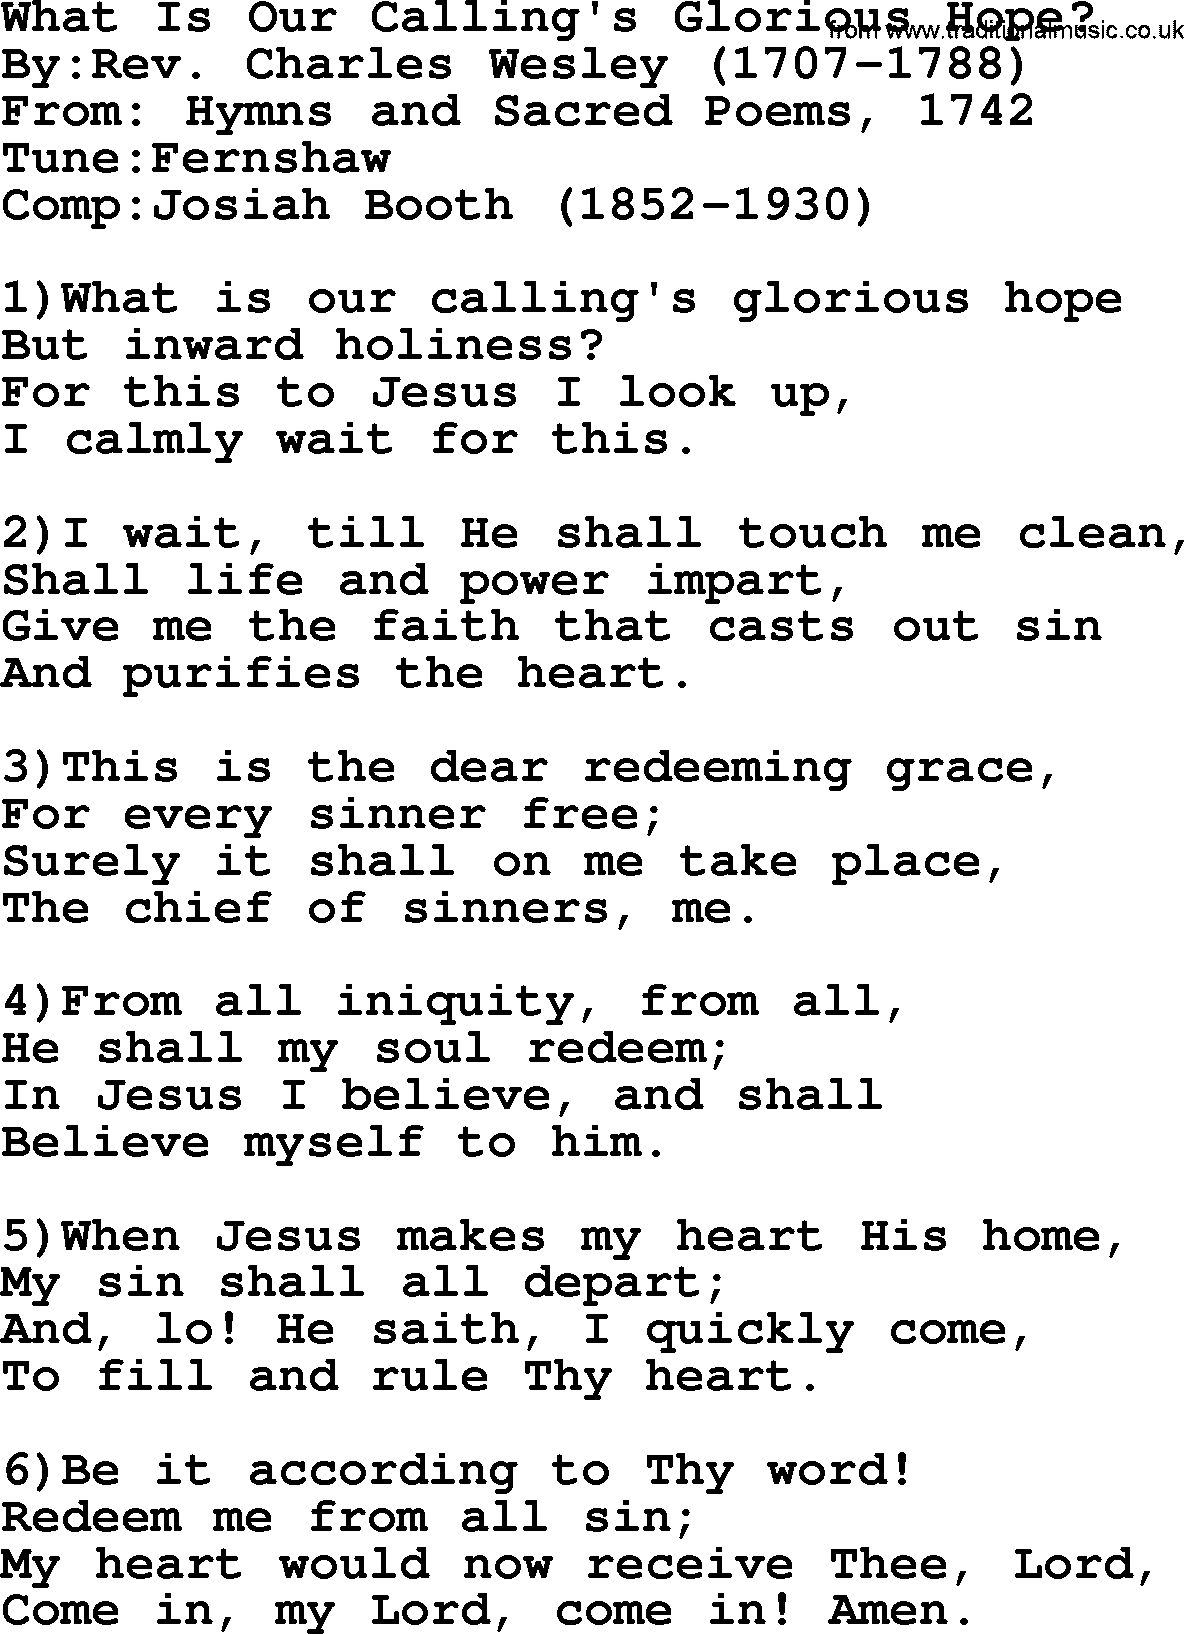 Methodist Hymn: What Is Our Calling's Glorious Hope, lyrics